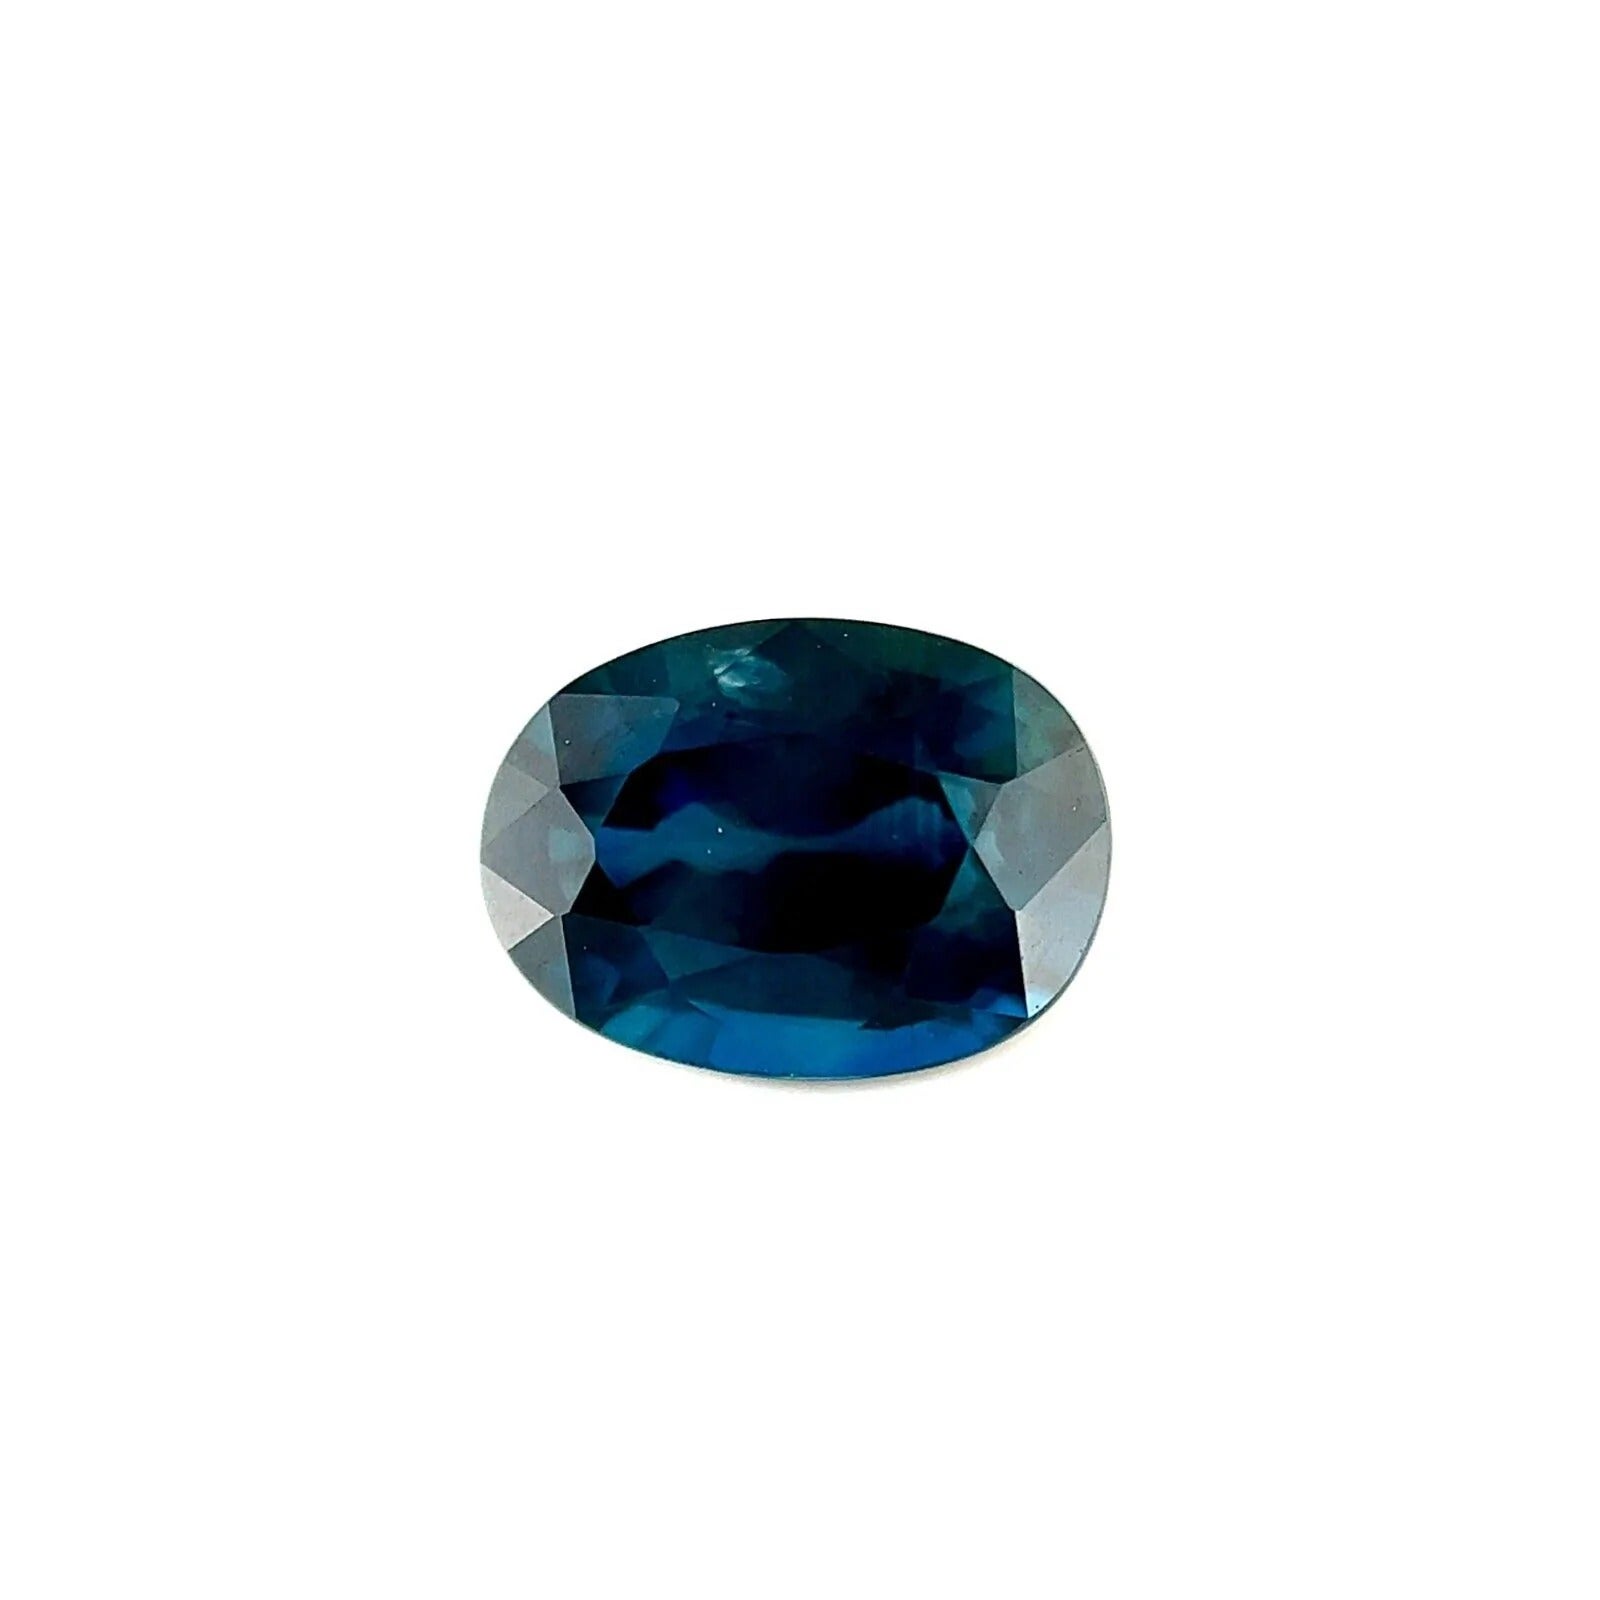 1.40ct Deep Green Blue Natural Sapphire Oval 'Egg' Cut Rare Gem 7.5x5.5mm For Sale